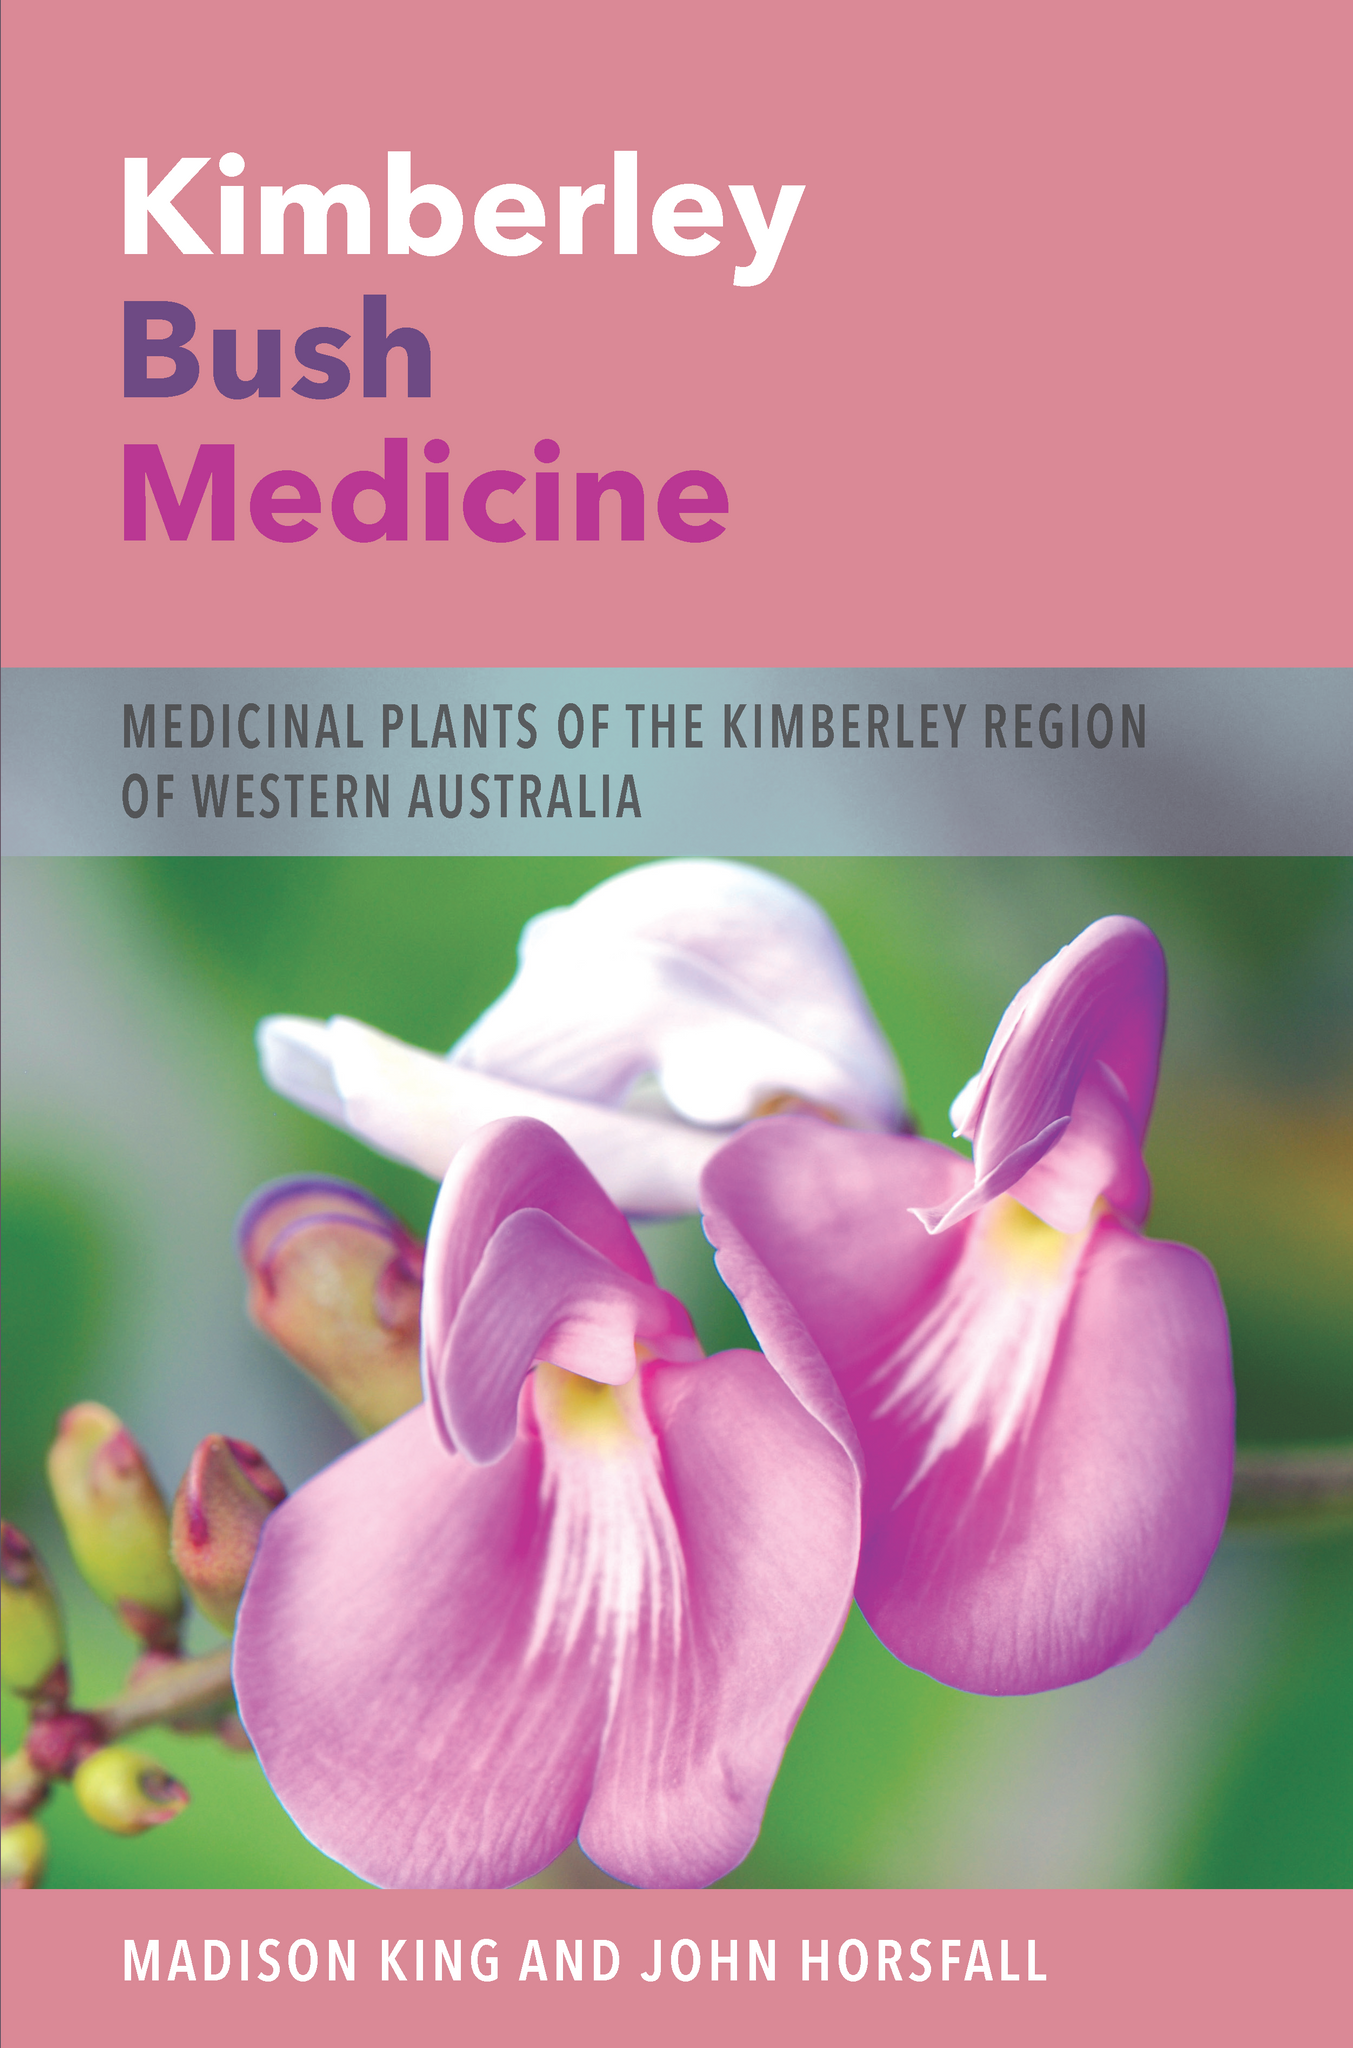 Kimberley Bush Medicine: Medicinal Plants of the Kimberley Region of Western Australia